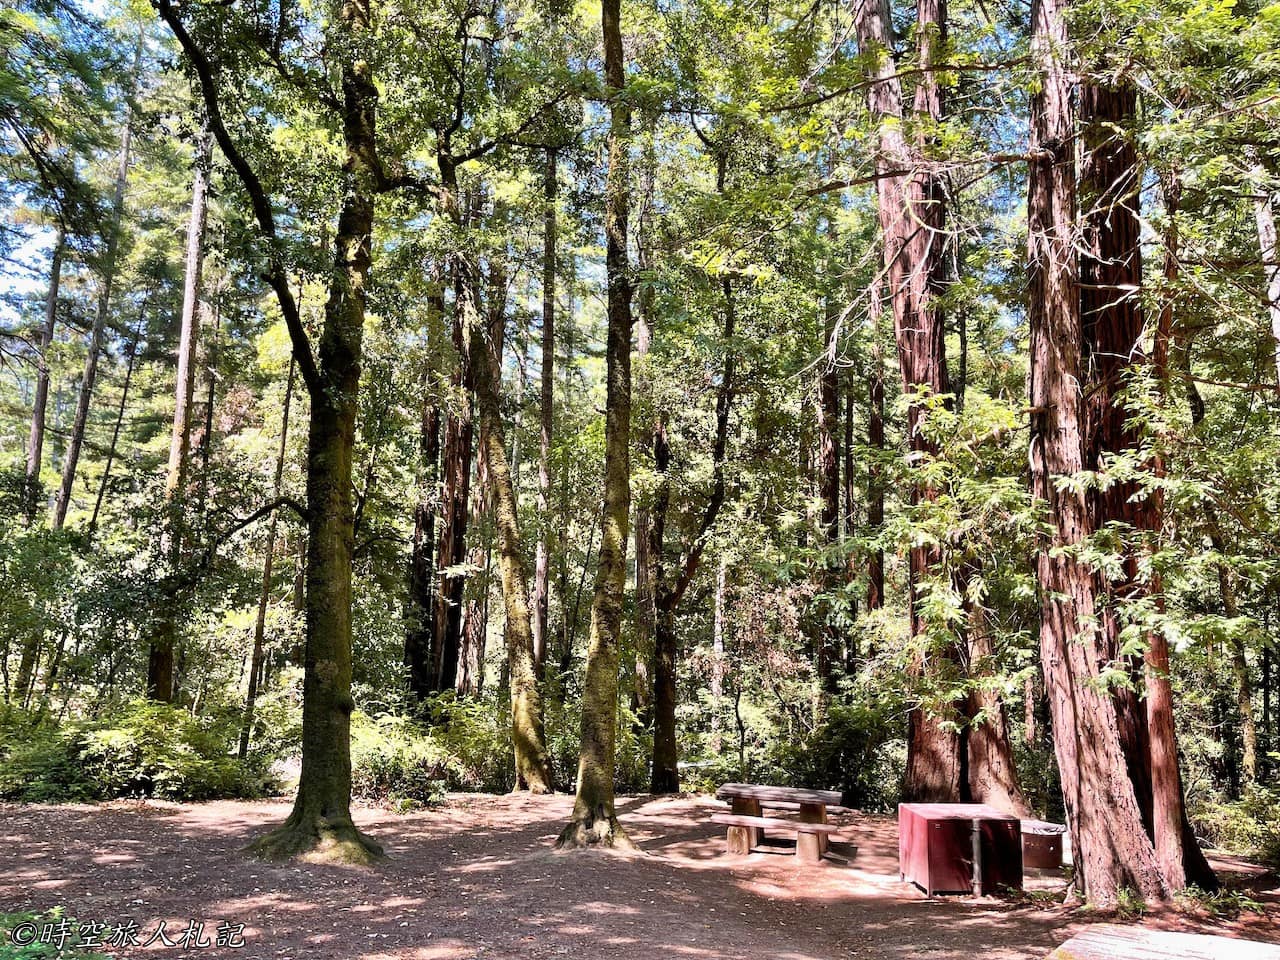 Portola redwood state park 11